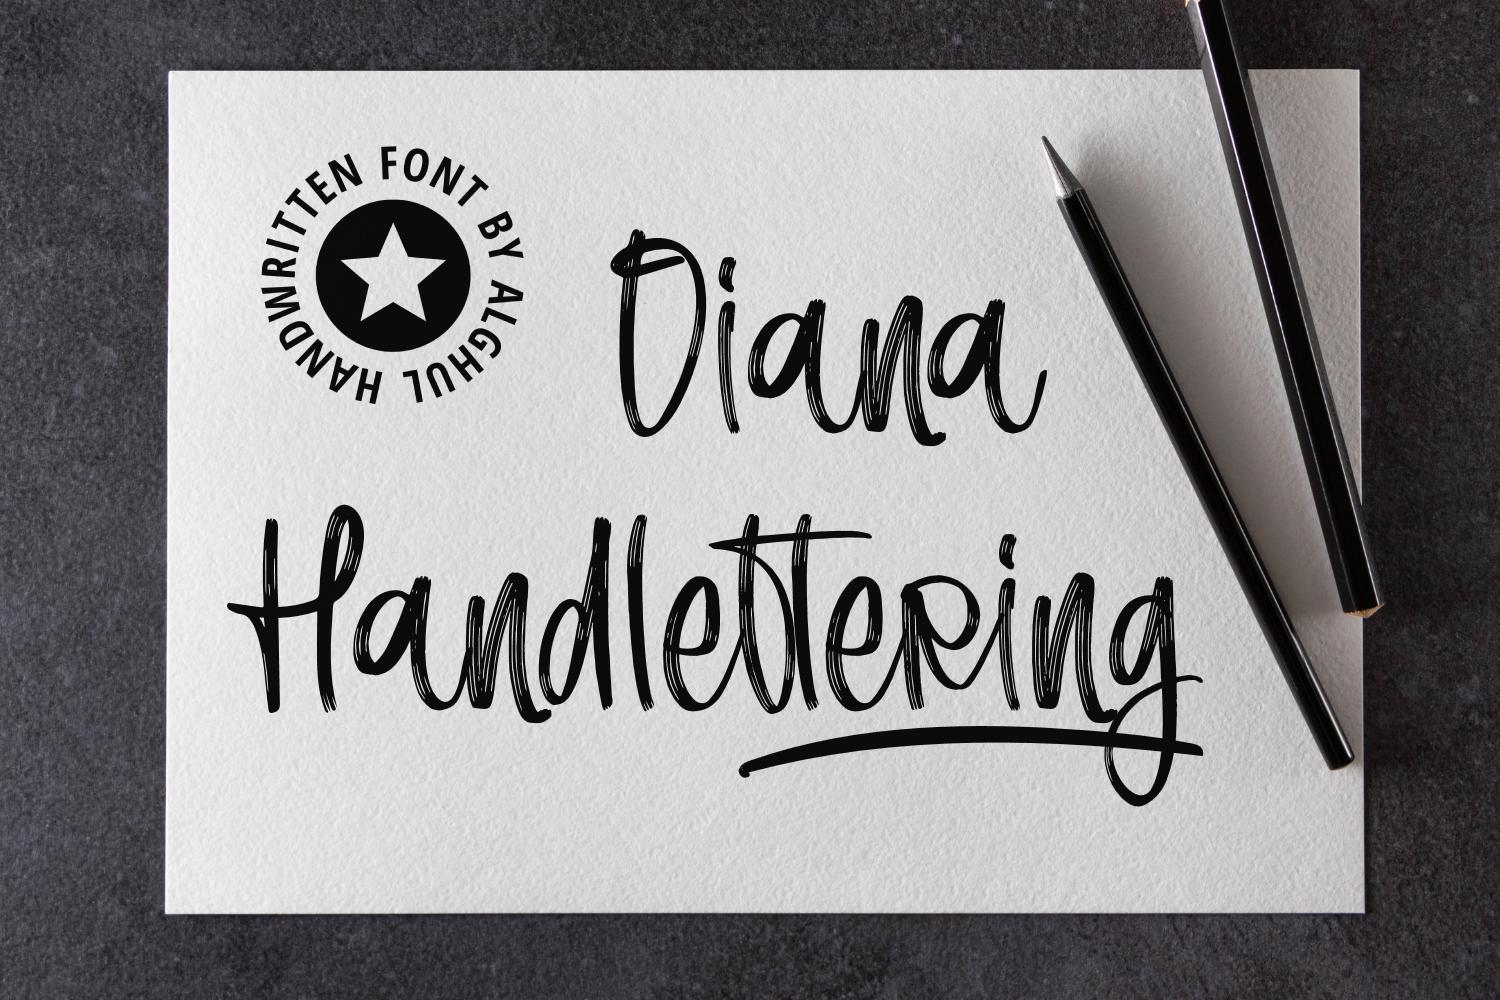 Diana Handlettering Font